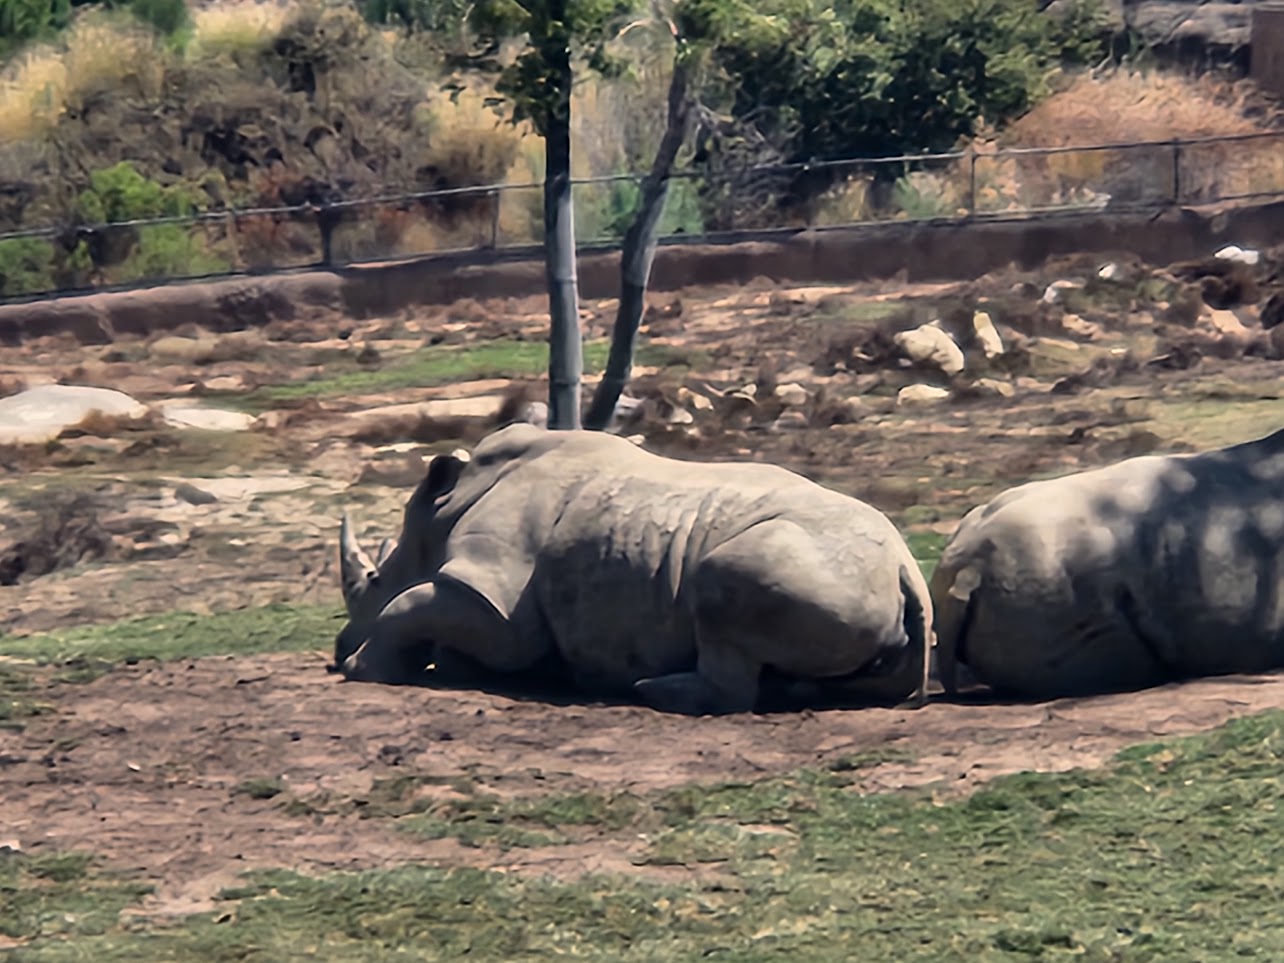 Rhino resting